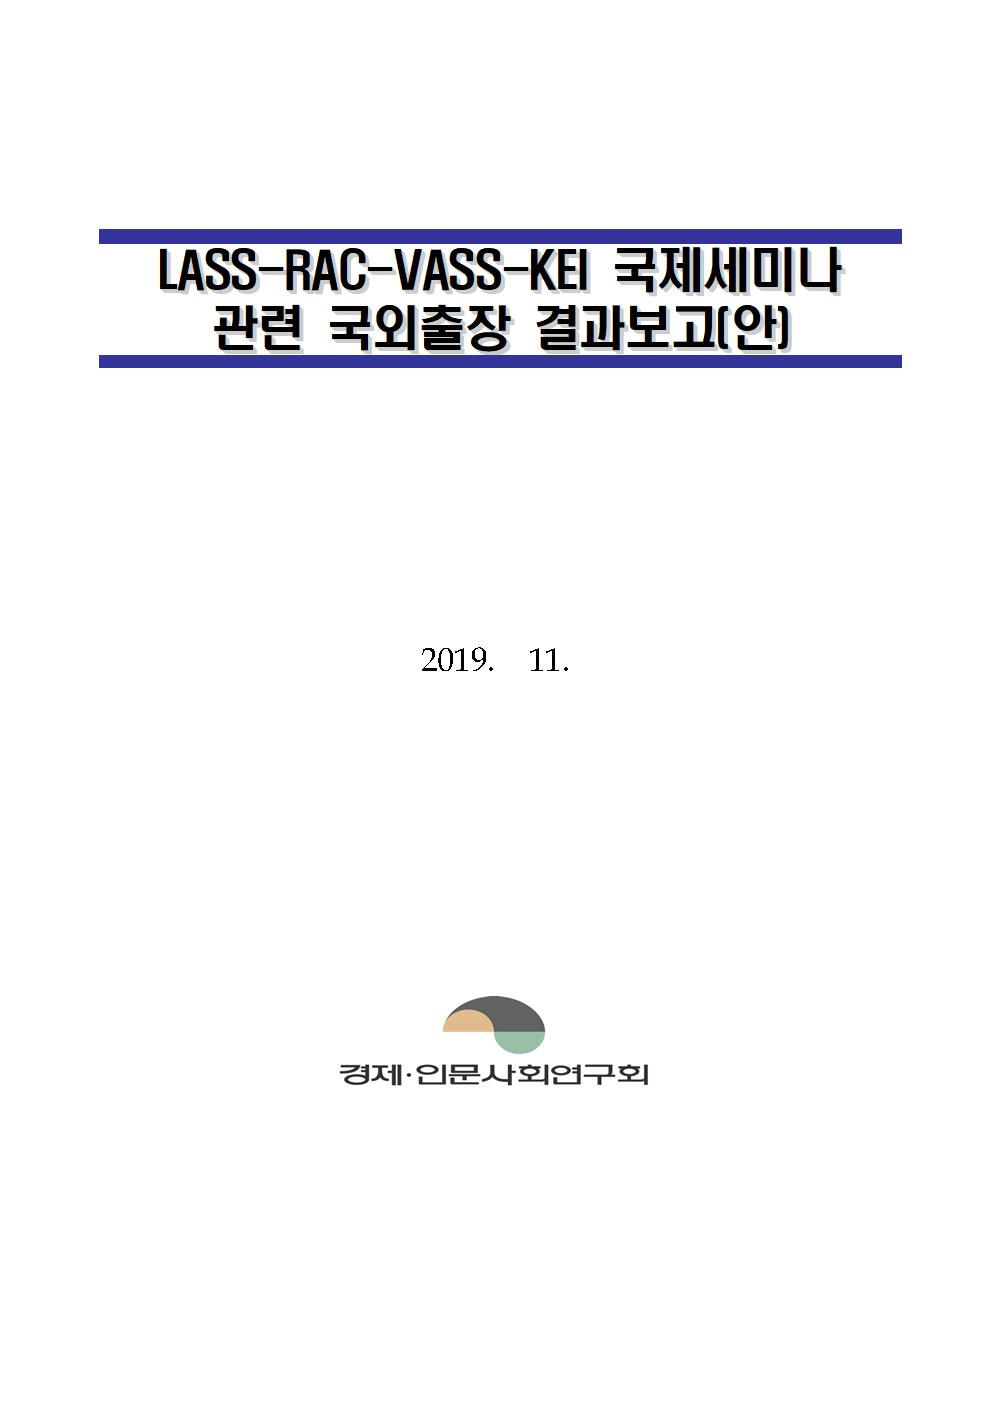 LASS-RAC-VASS-KEI 국제세미나 국외출장 결과 보고 표지이미지